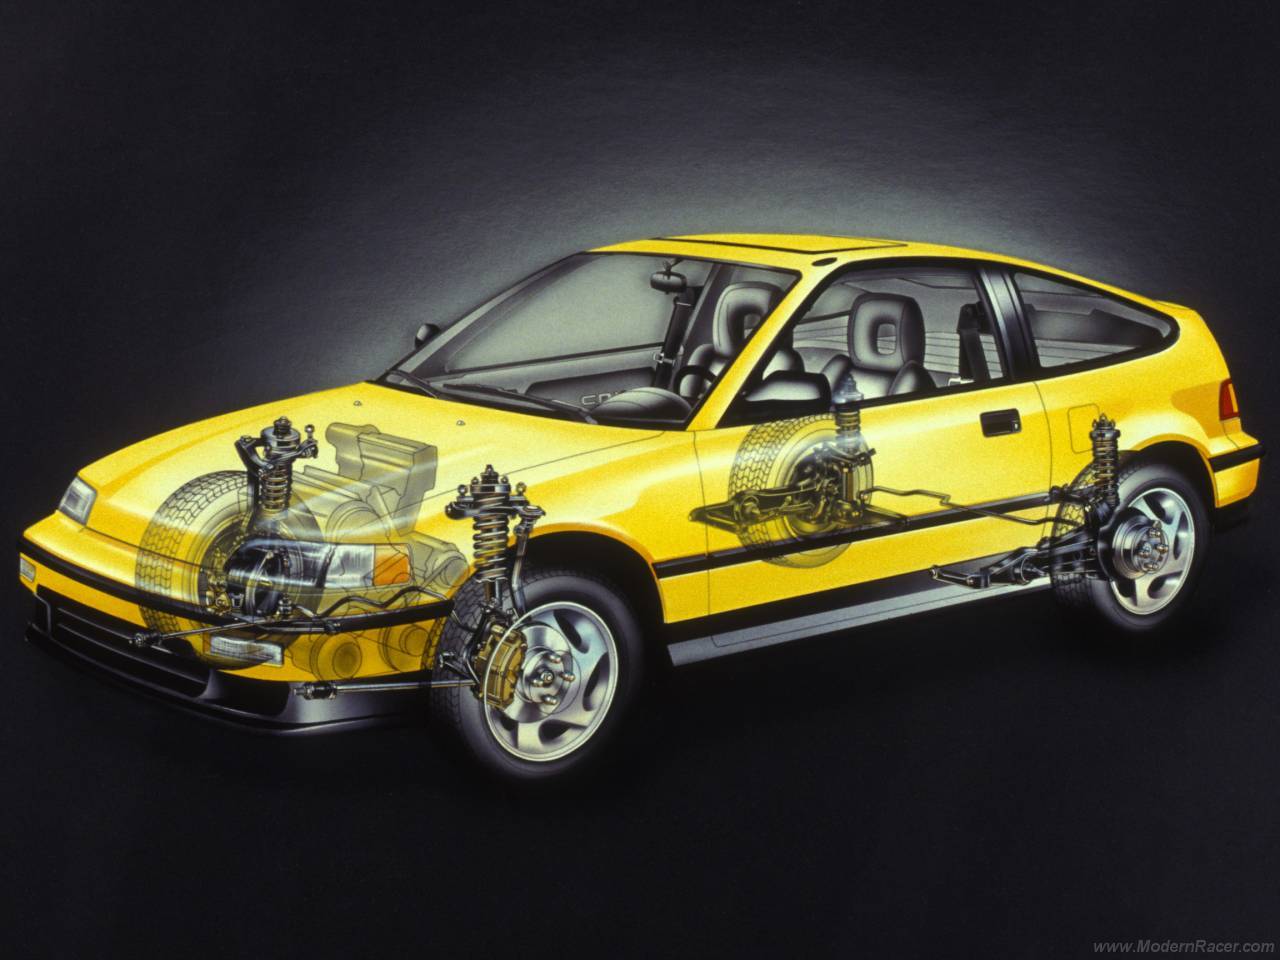 Honda Civic Crx Wallpaper And Background Image